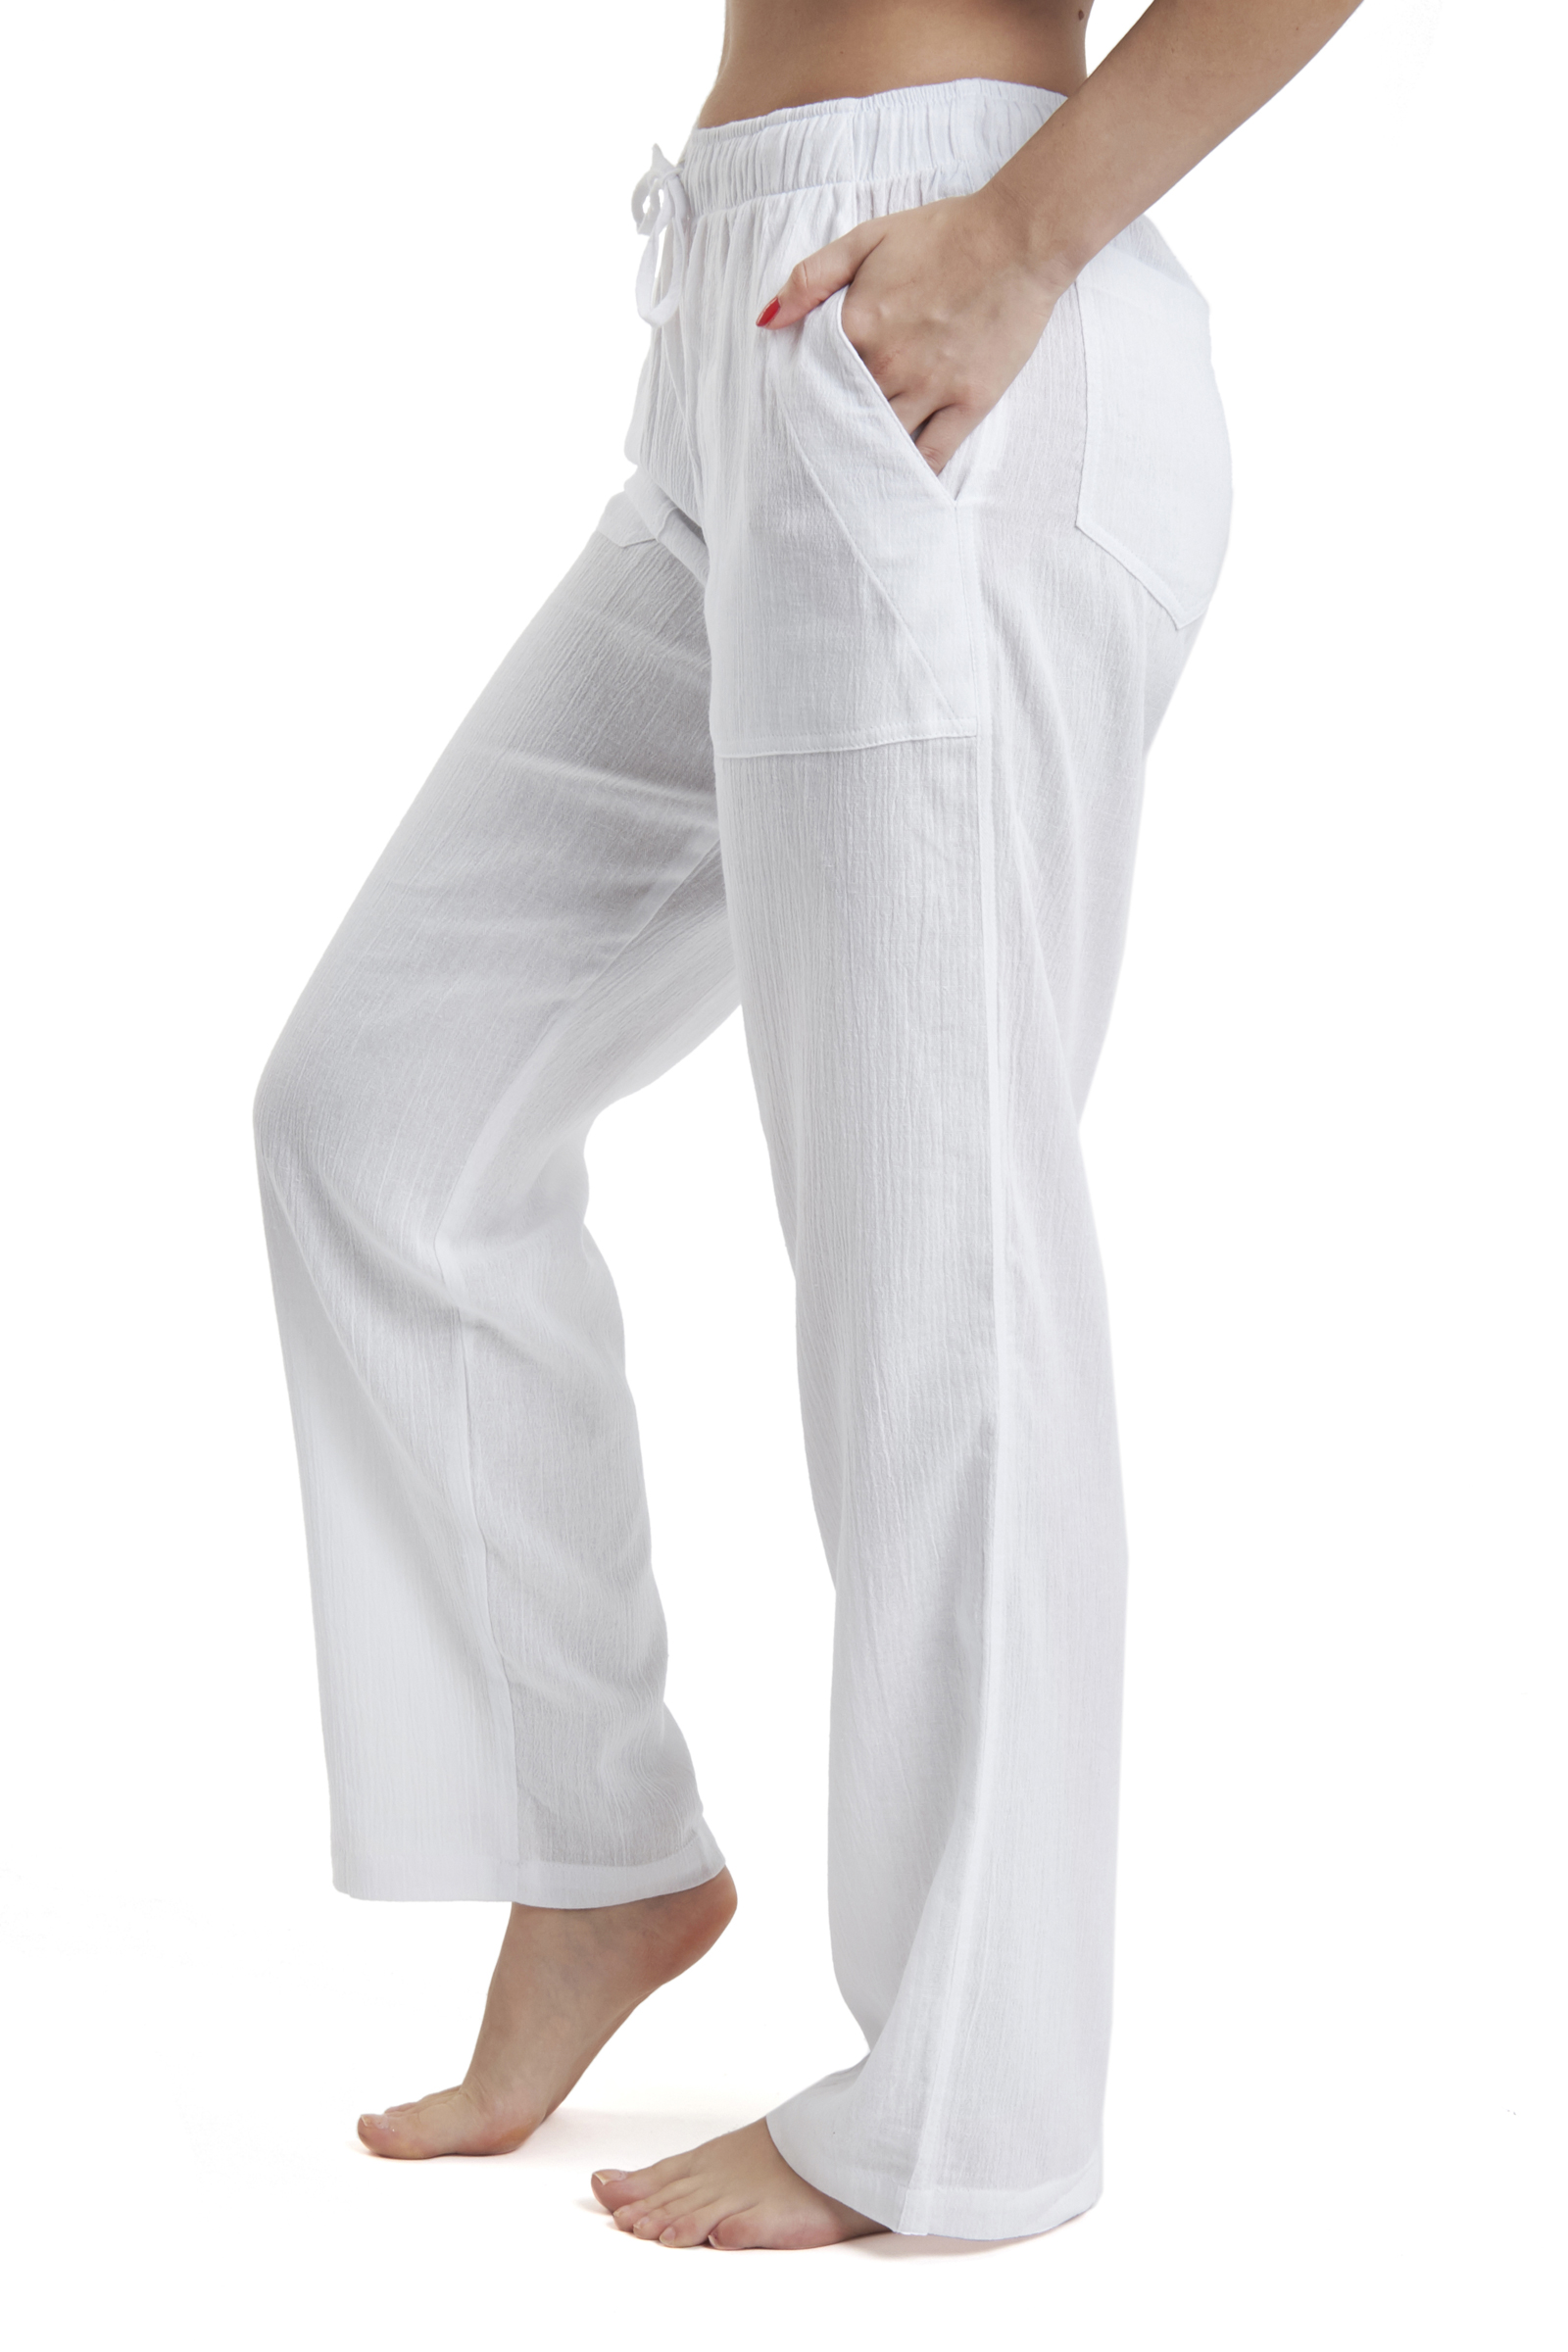 J & Ce Women's Cotton Gauze Low Waist Beach Pants with Pockets